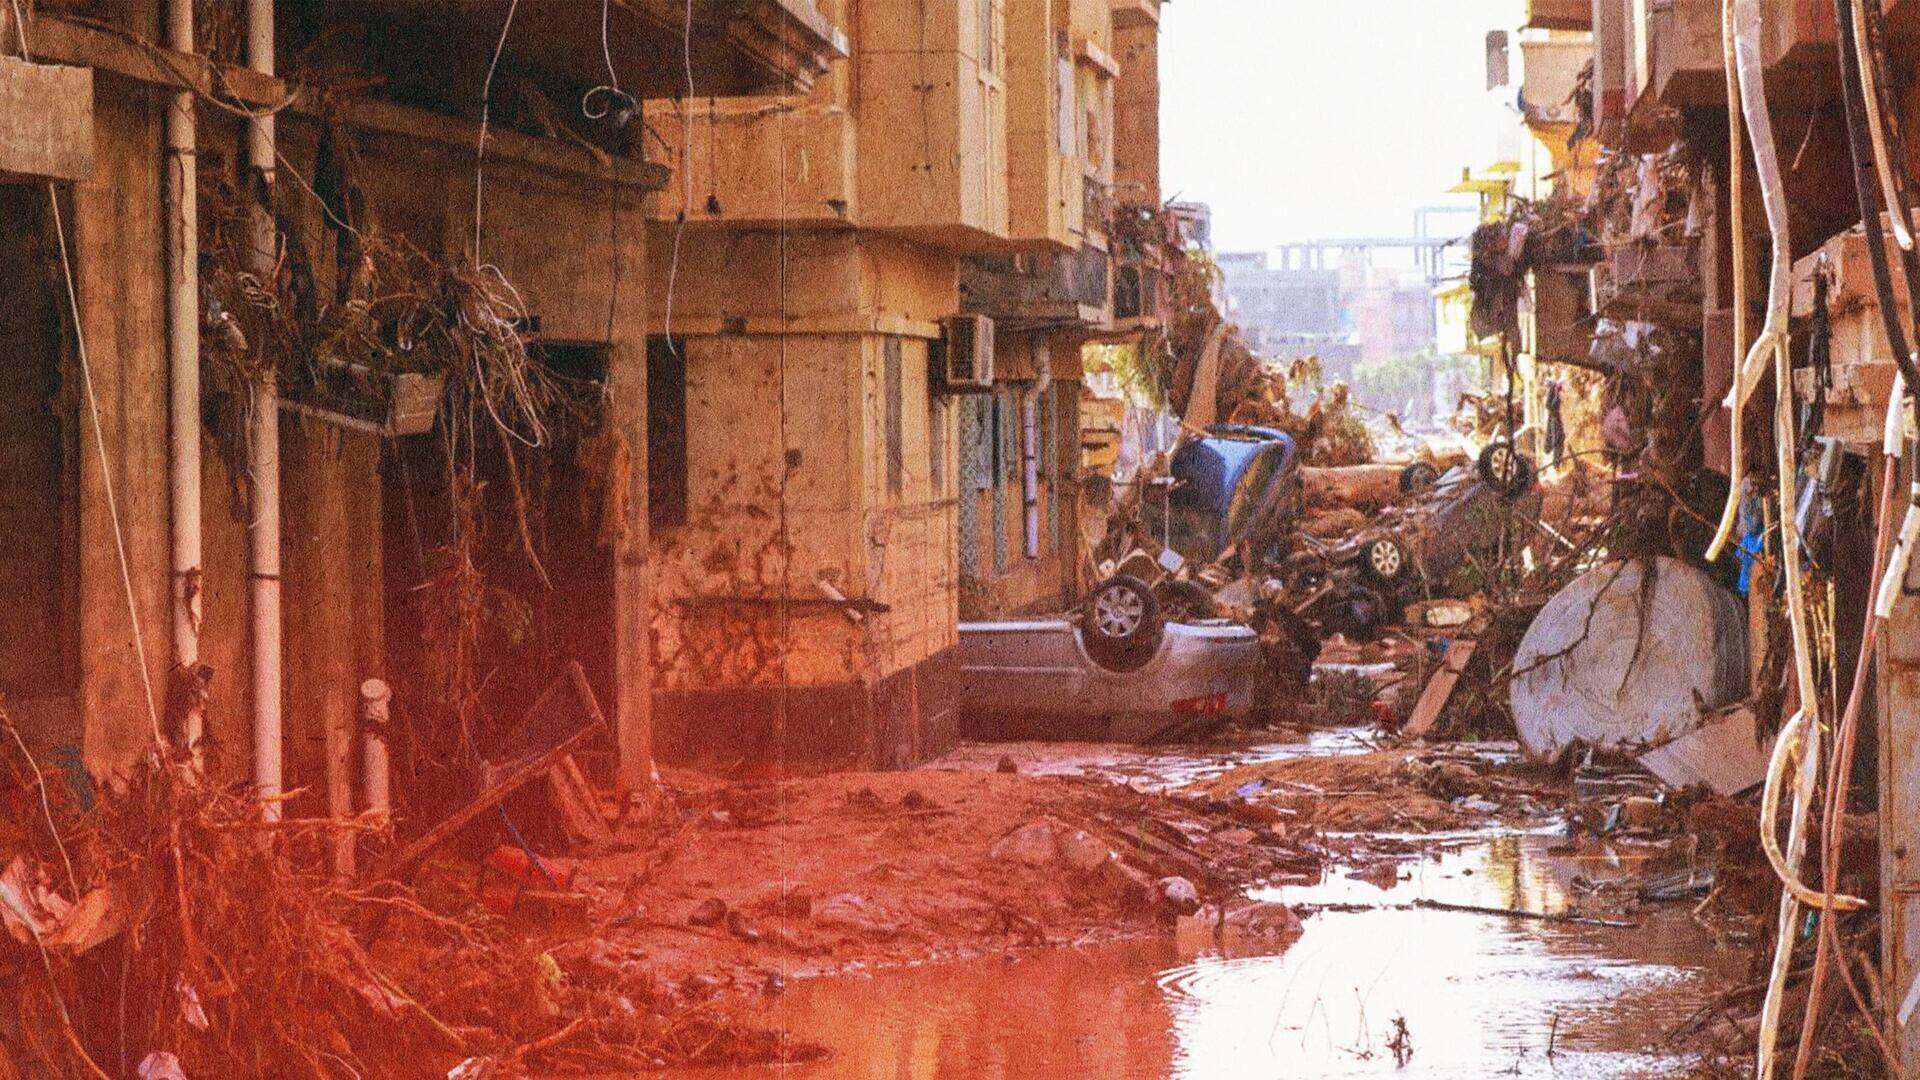 Libya floods: శవాల దిబ్బగా లిబియాలో డెర్నా నగరం.. 'డేనియల్' తుపాను ధాటికి 5,300పైగా మృతి 